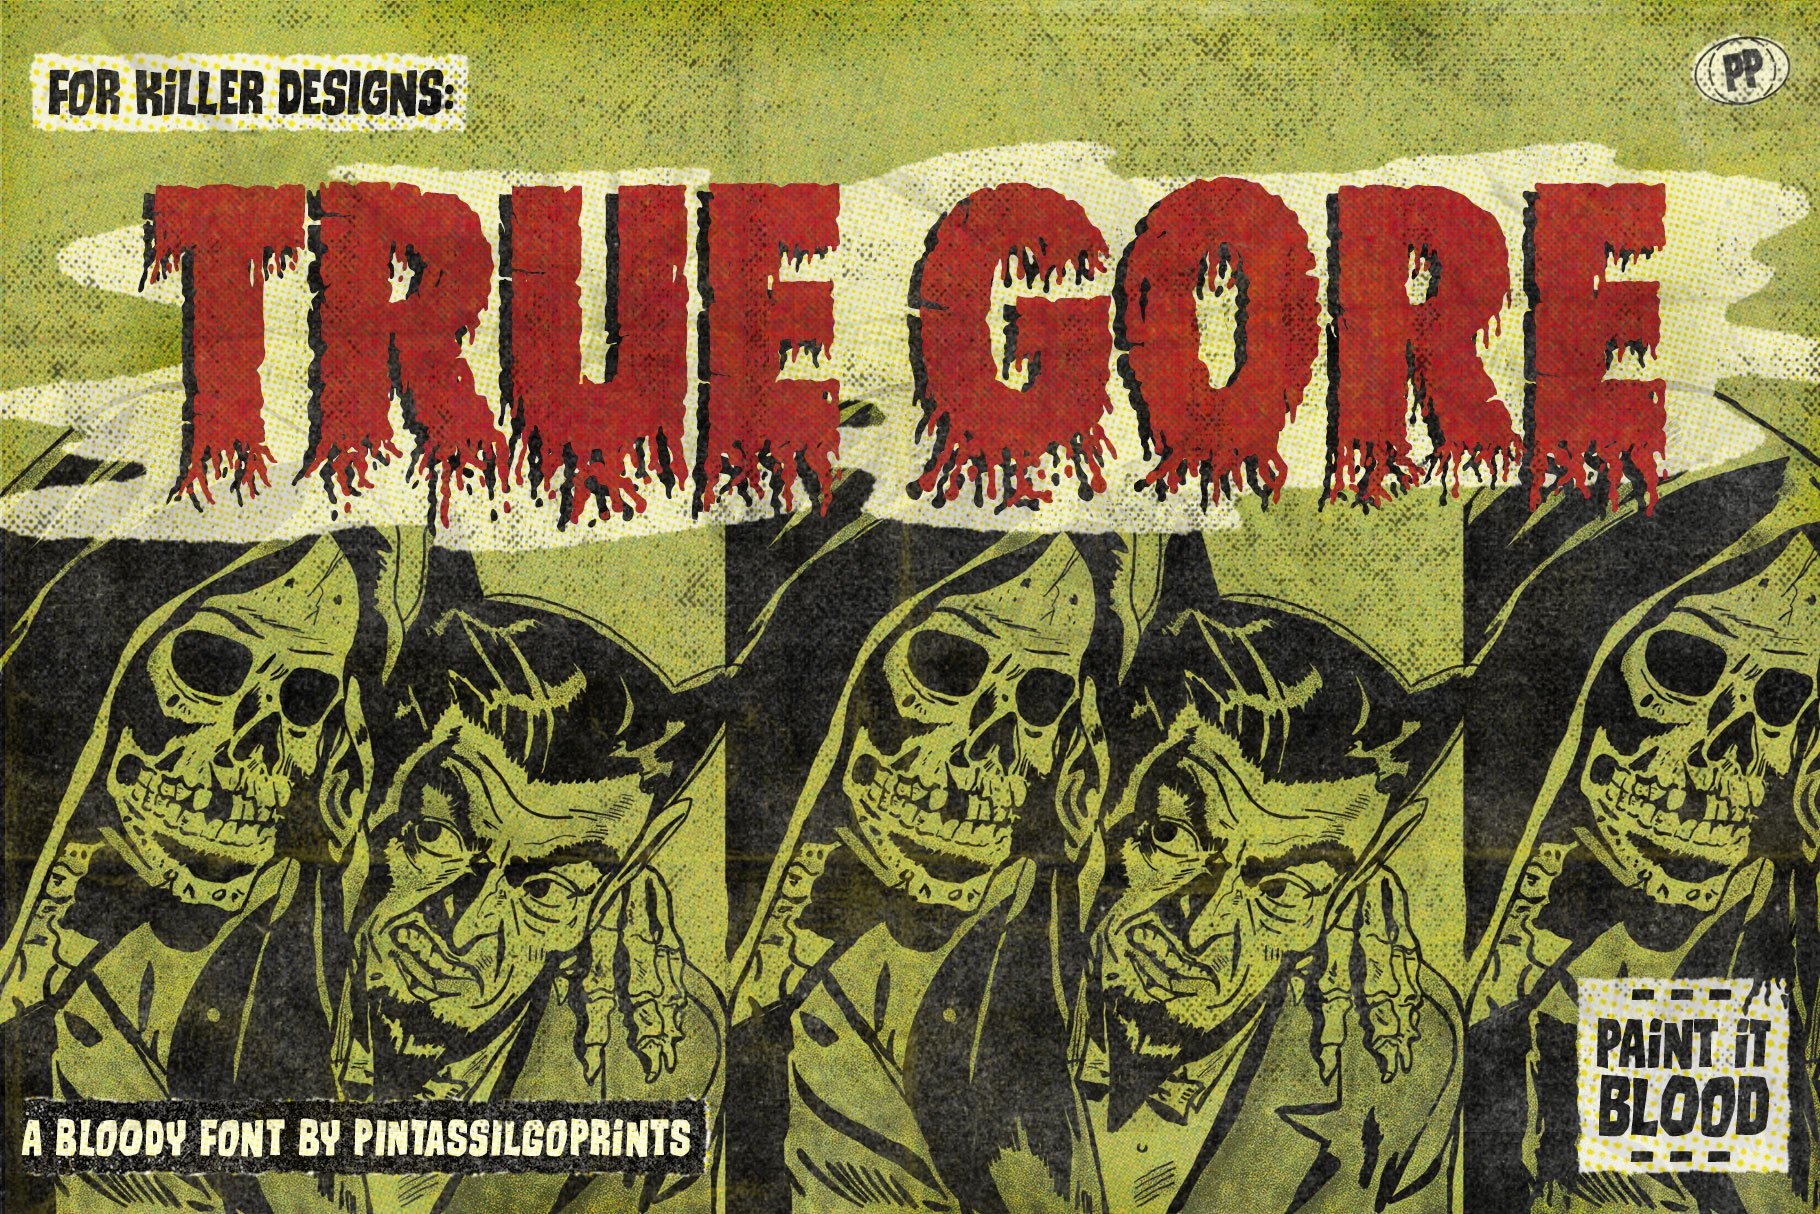 New! True Gore, For killer designs cover image.